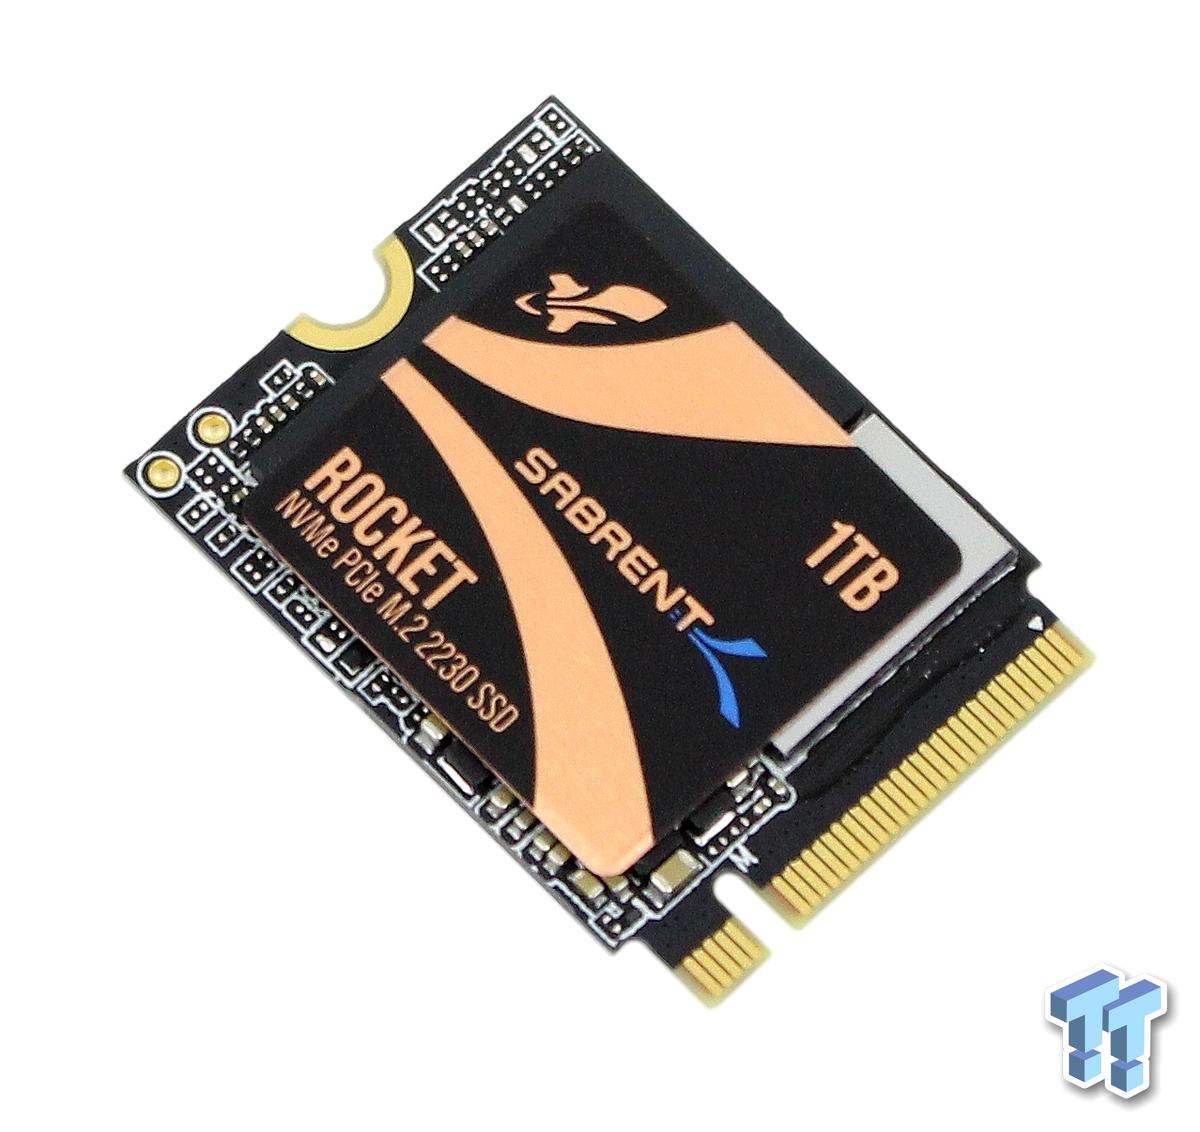 Sabrent Rocket 2TB M.2 2230 NVMe PCIe 4.0 SSD/Solid State Drive